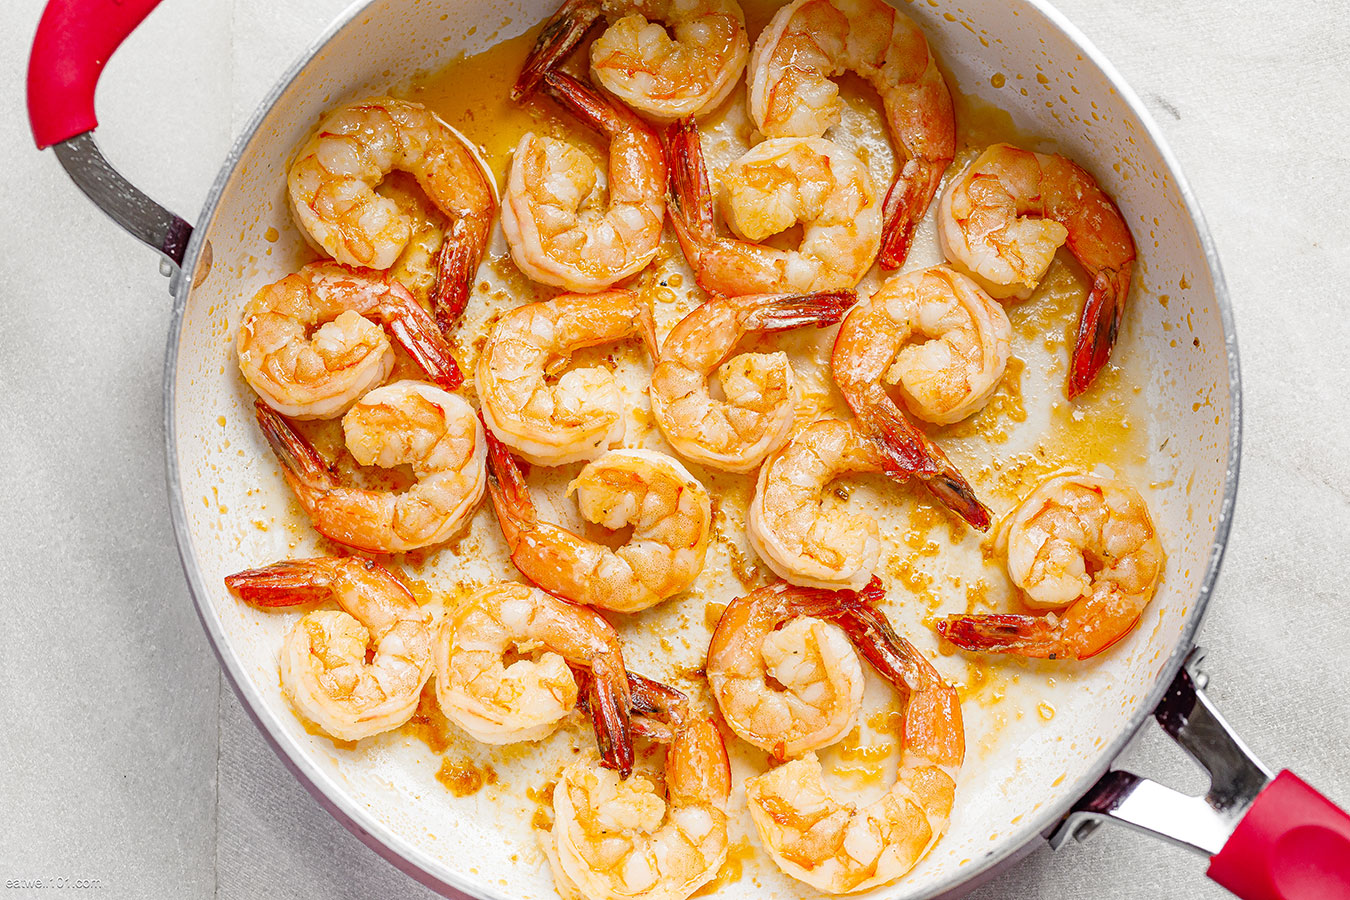 https://www.eatwell101.com/wp-content/uploads/2020/06/Creamy-Garlic-Shrimp-recipe-4.jpg